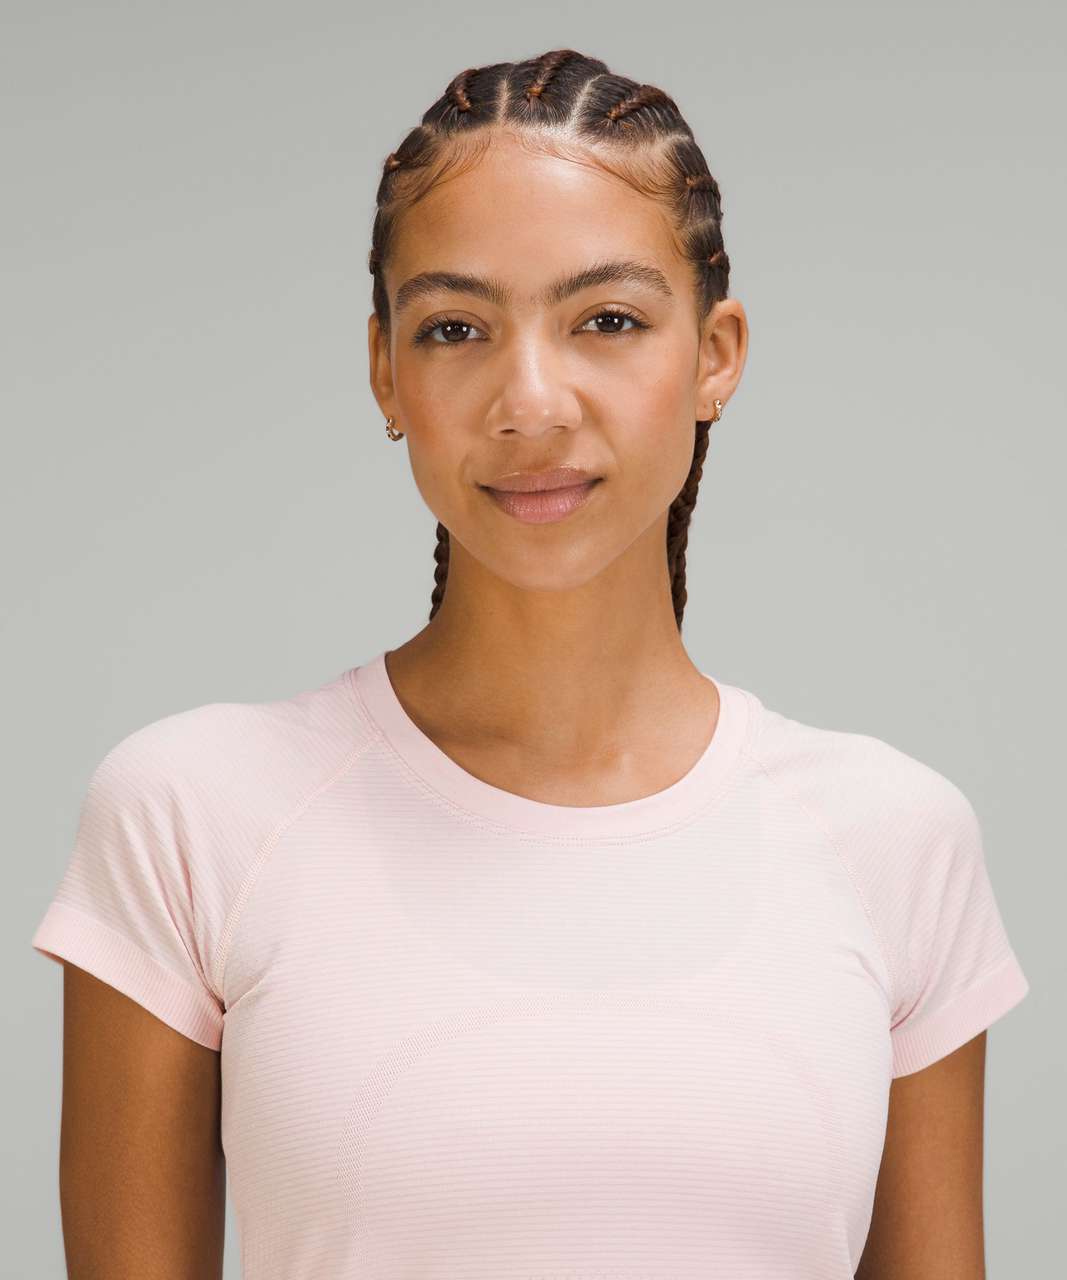 Lululemon Swiftly Tech Short Sleeve Shirt 2.0 - Strawberry Milkshake / White